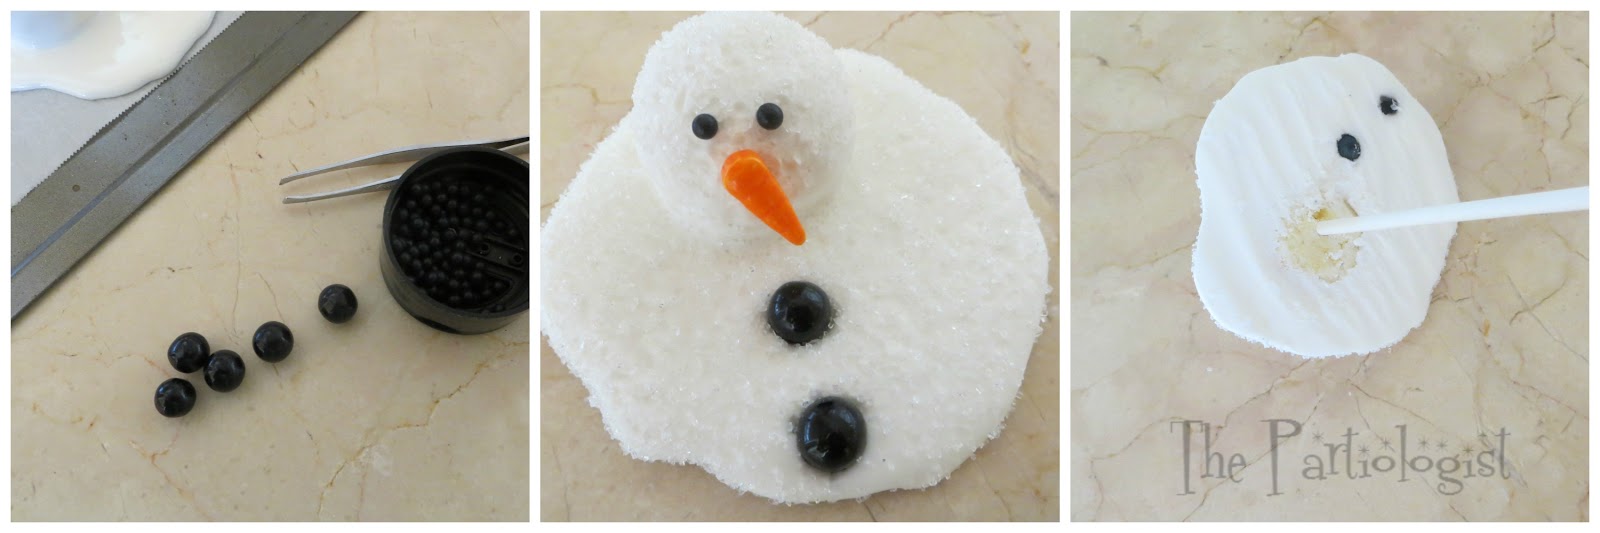 Pop Up Melting Snowman Craft for Kids